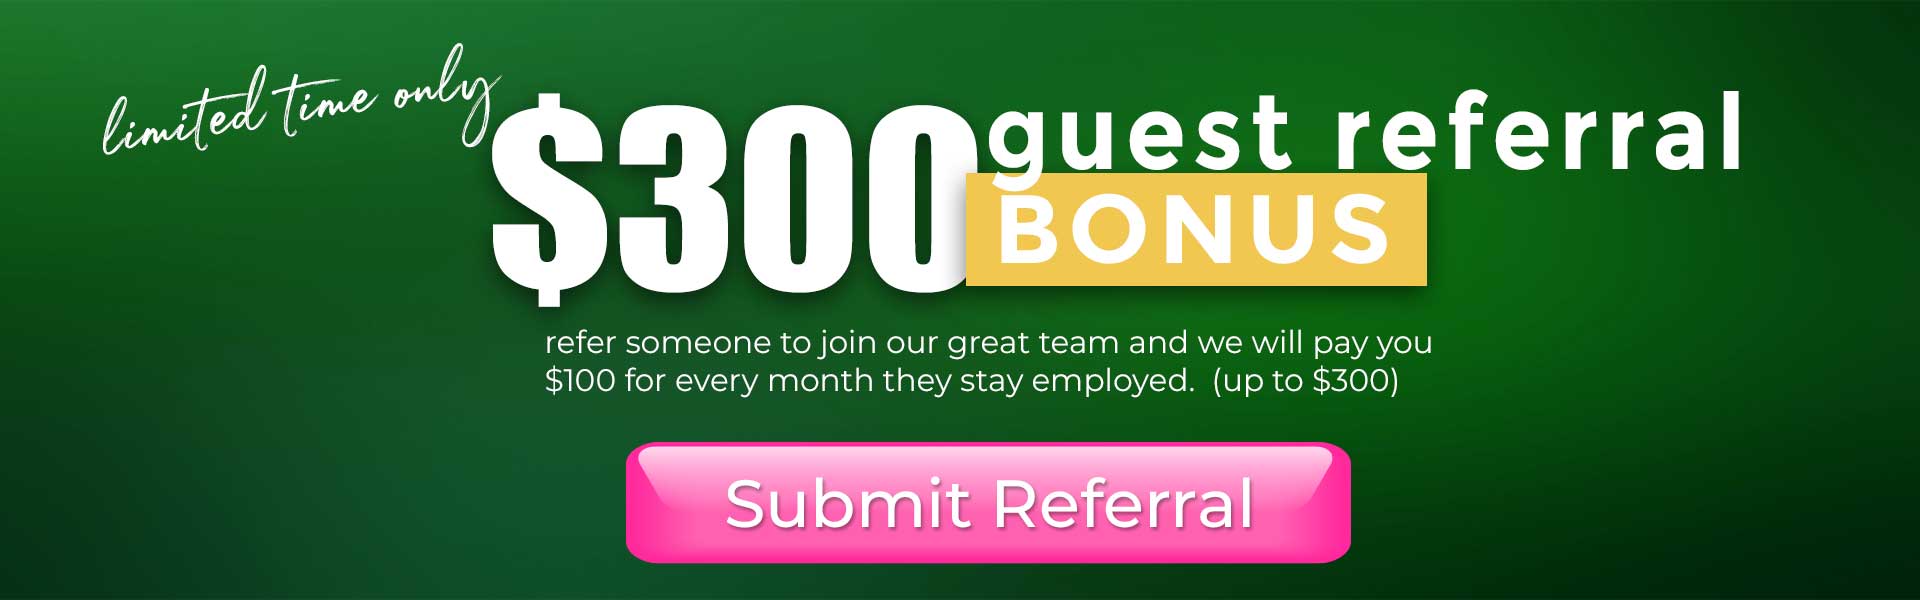 guest-referral-bonus-limited-time-pink-button-v3